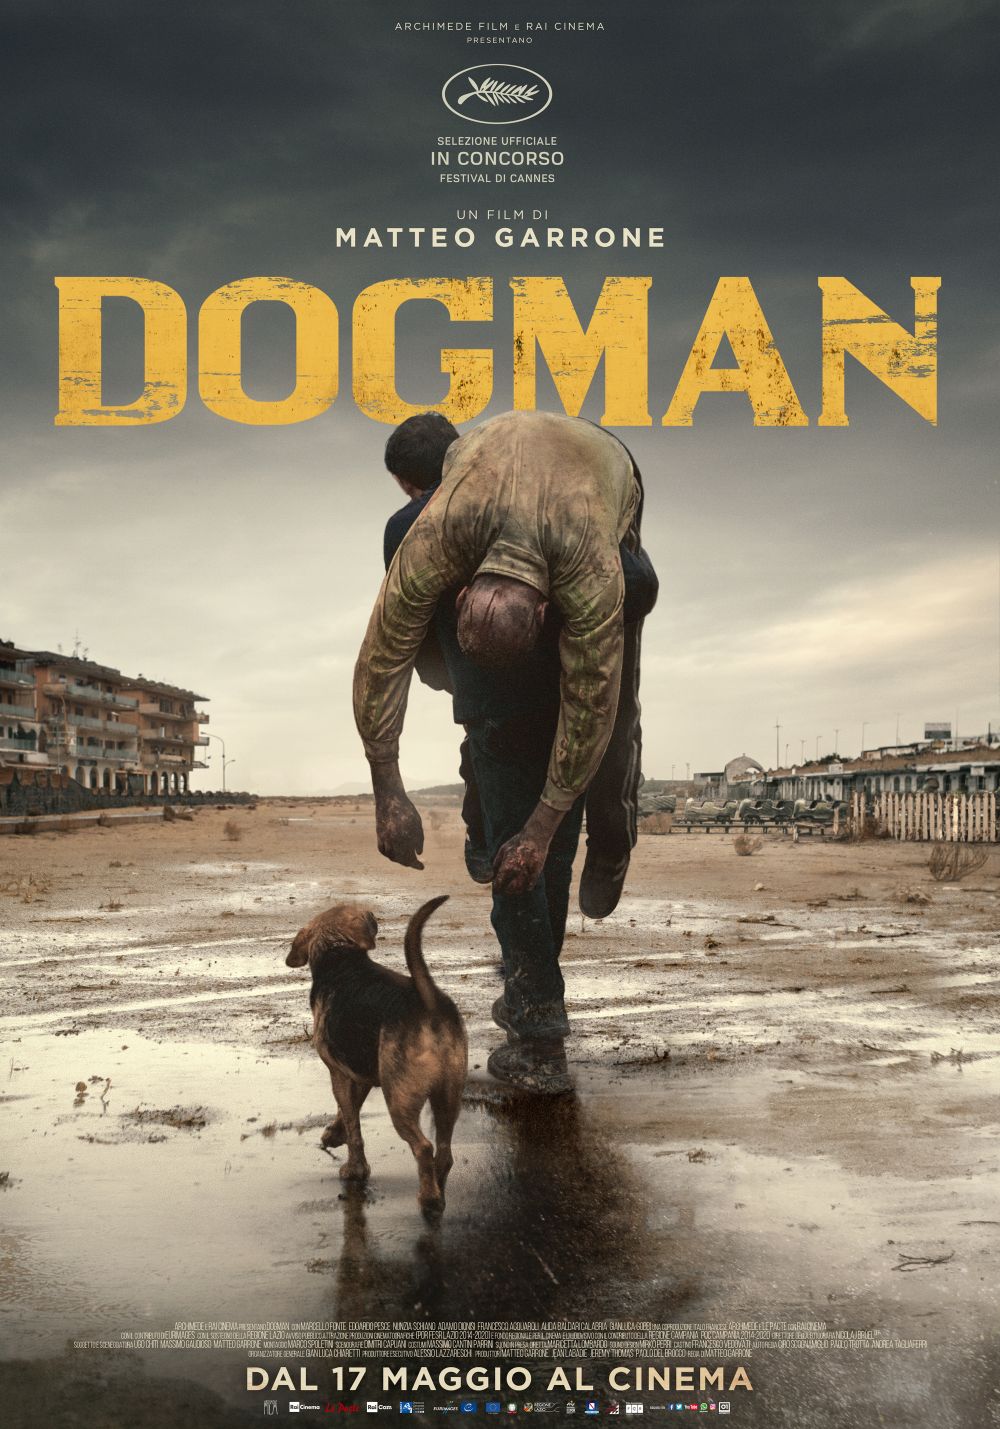 Dogman Poster Eewrjj6